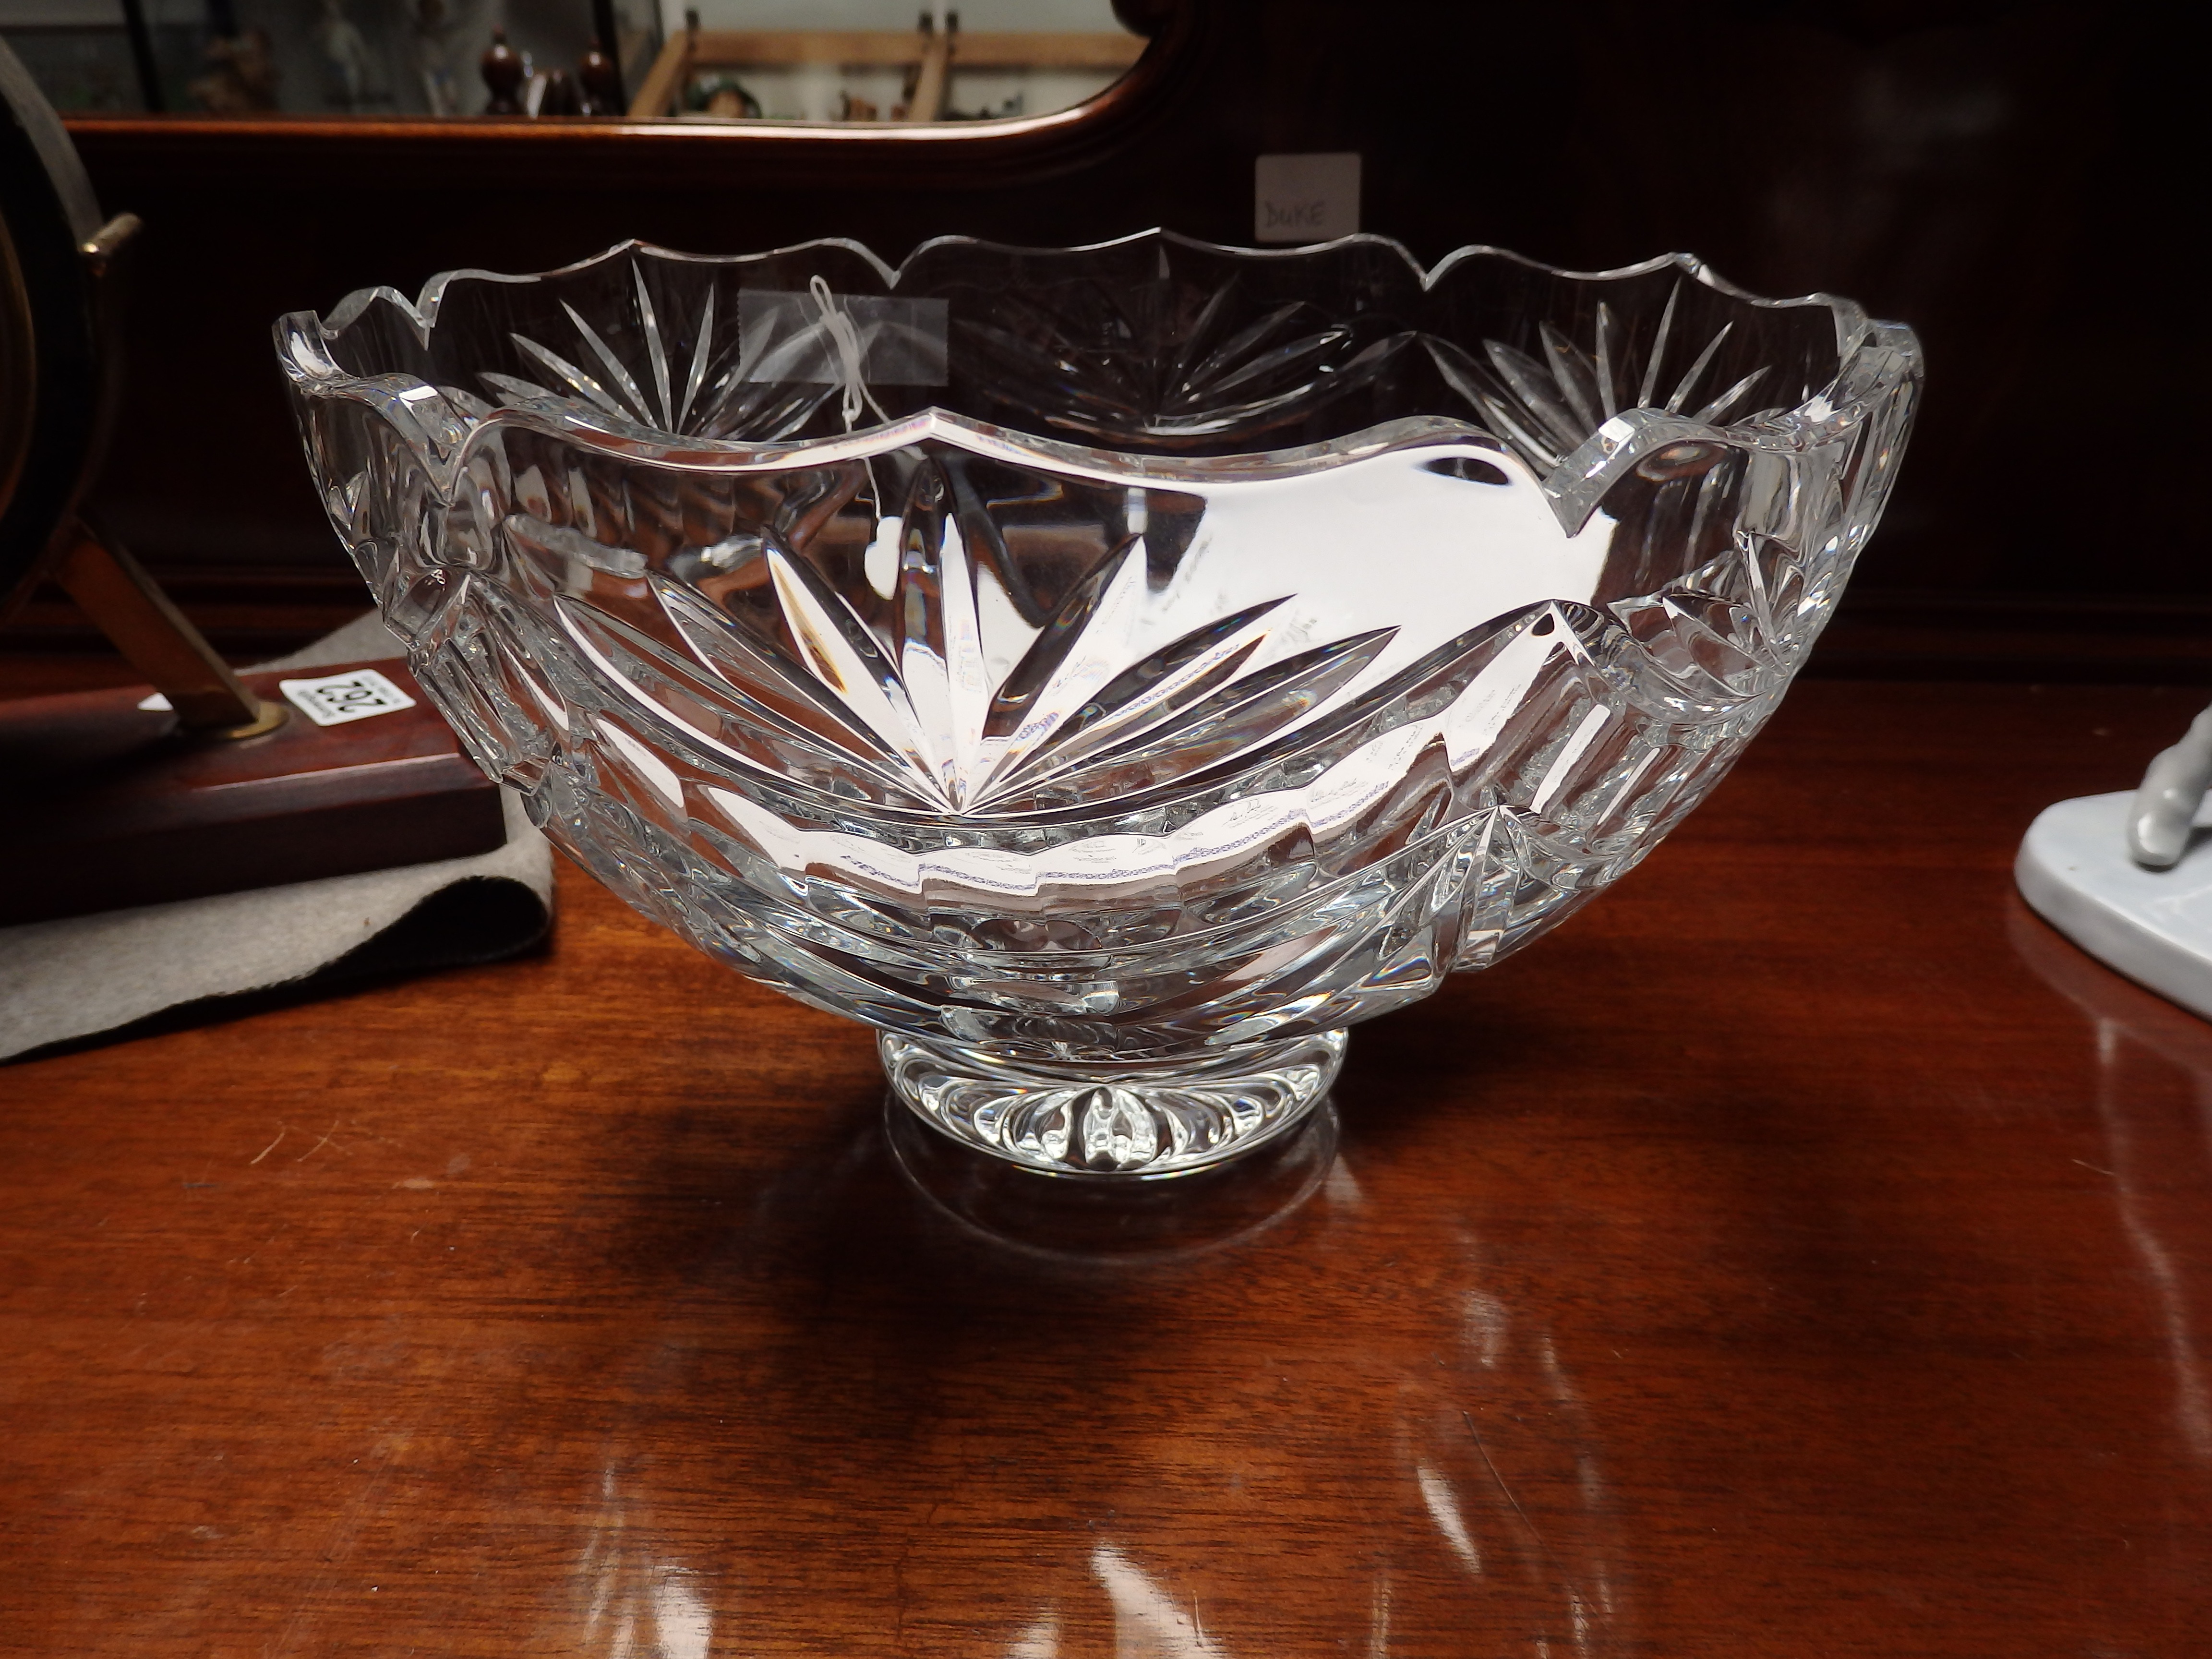 Waterford Crystal bowl